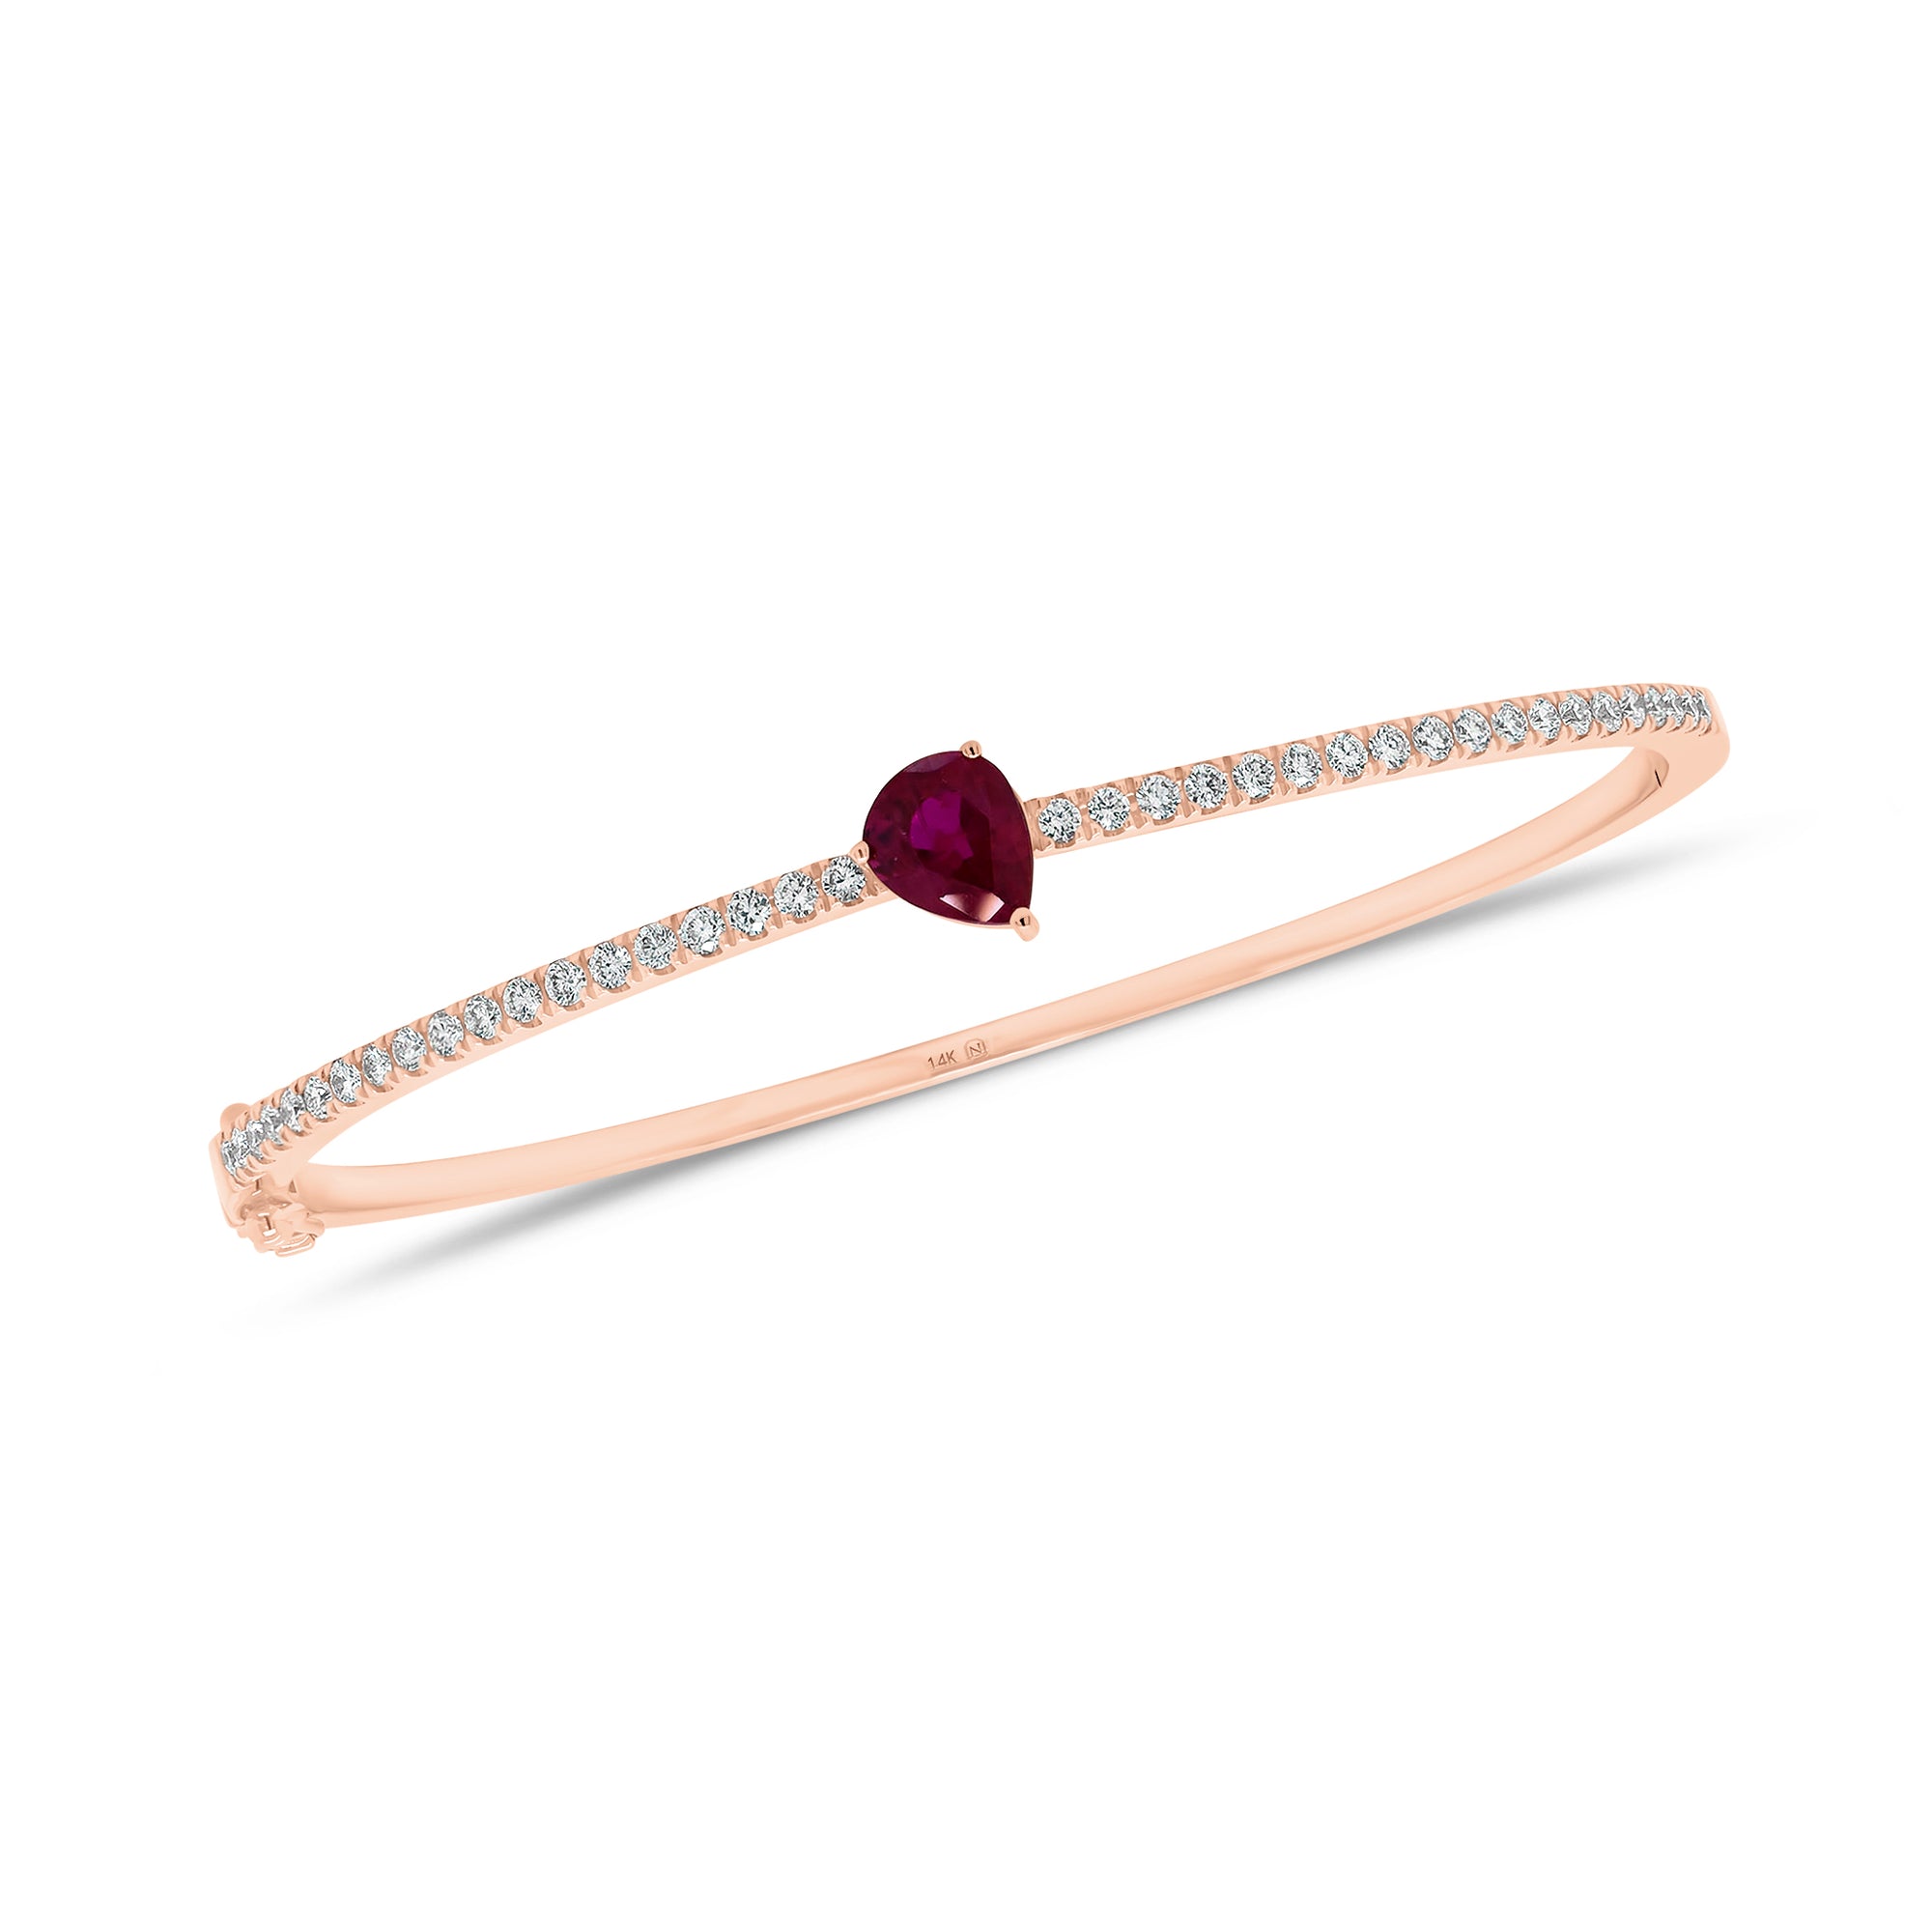 Pear-Shaped Ruby & Diamond Bangle Bracelet - 14K gold weighing 9.09 grams  - 38 round diamonds weighing 0.54 carats  - 1.04 ct ruby